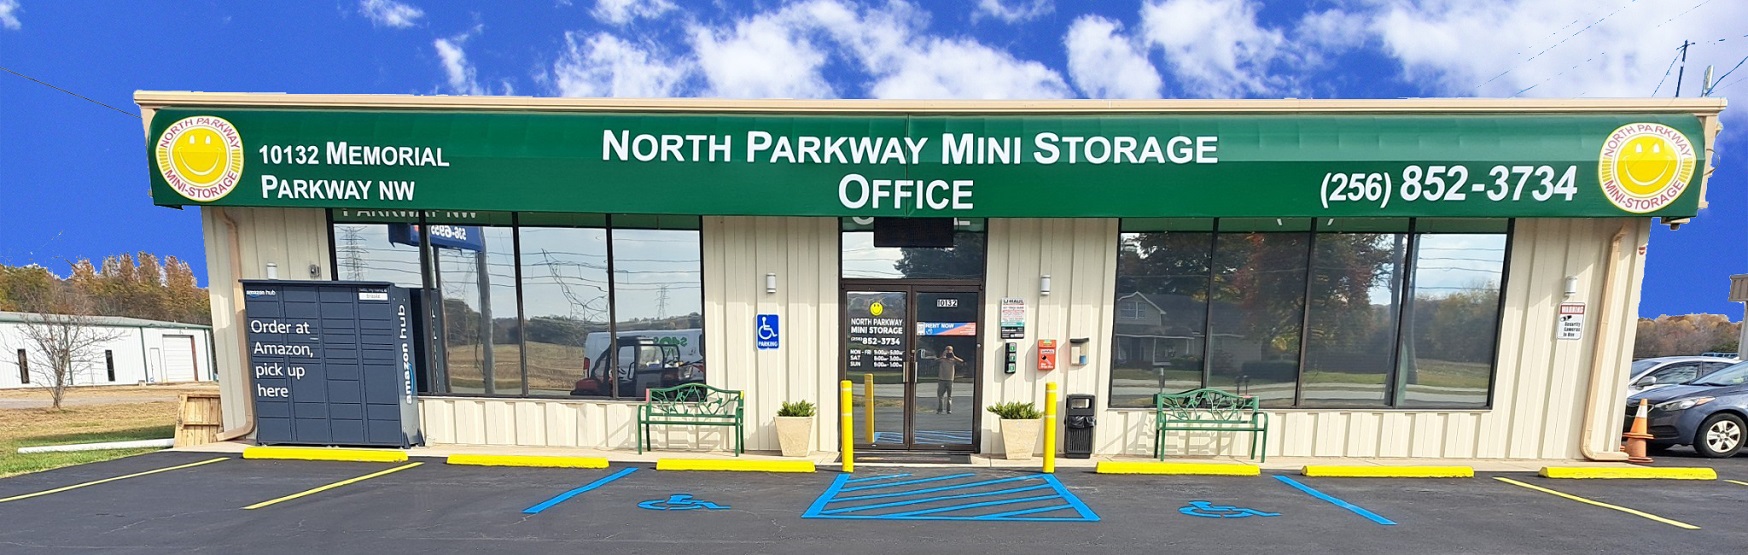 North Parkway Mini Storage in Huntsville, AL